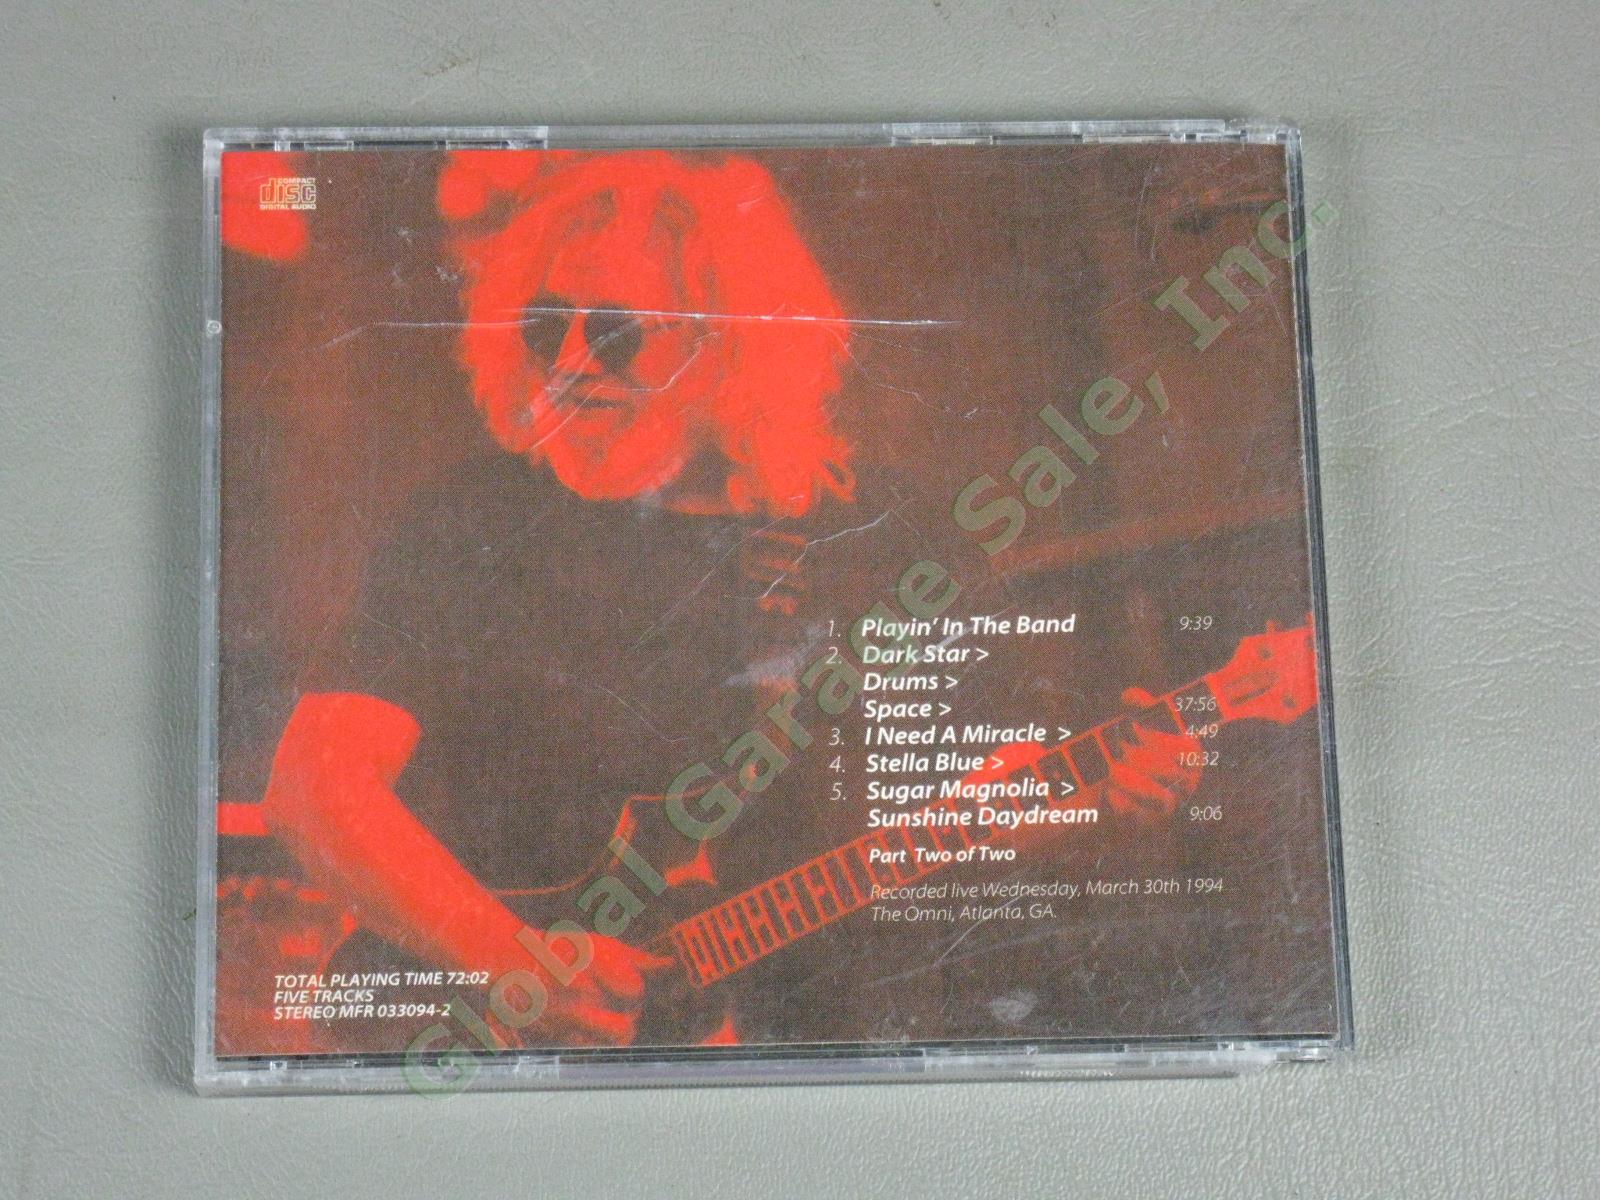 Vtg 1990s Grateful Dead Live Unreleased Show Concert Import CD VHS Lot 16 Discs 10